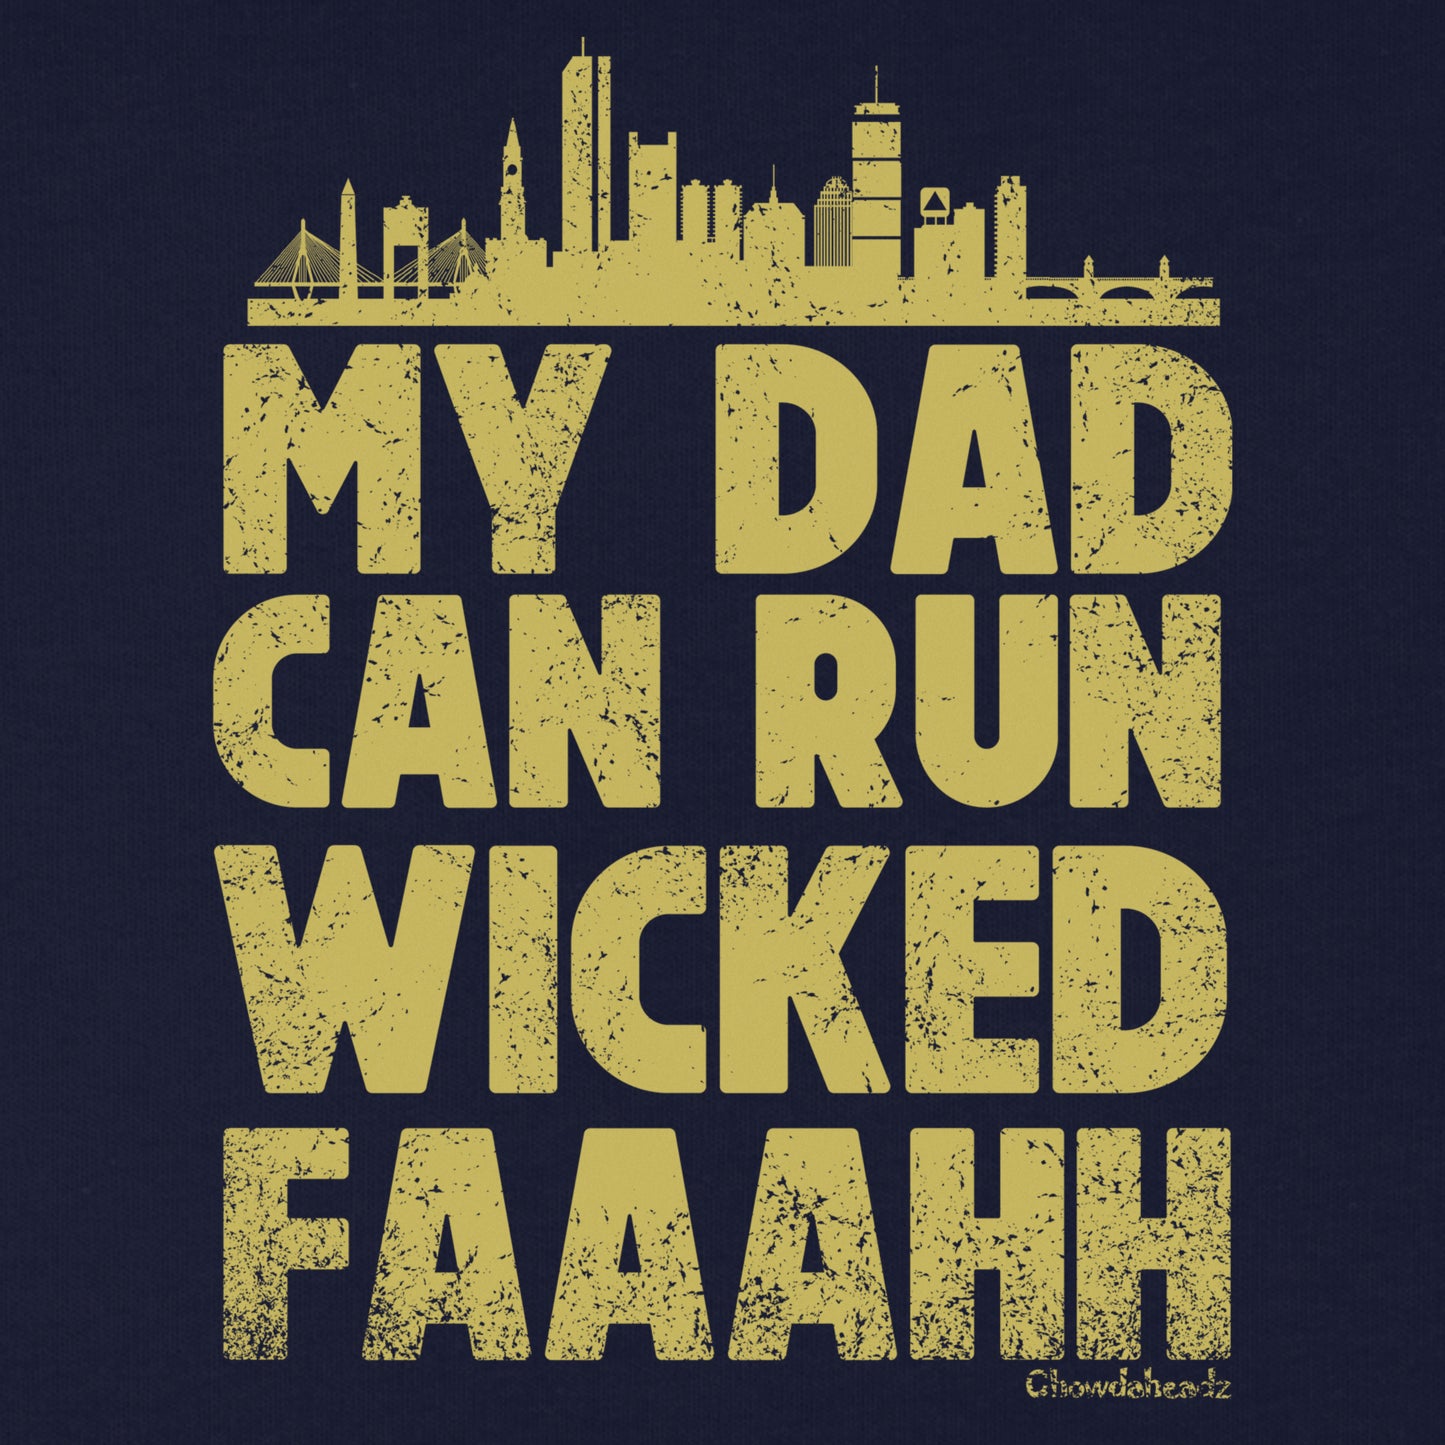 My Dad Can Run Wicked Faaaah Youth T-Shirt - Chowdaheadz